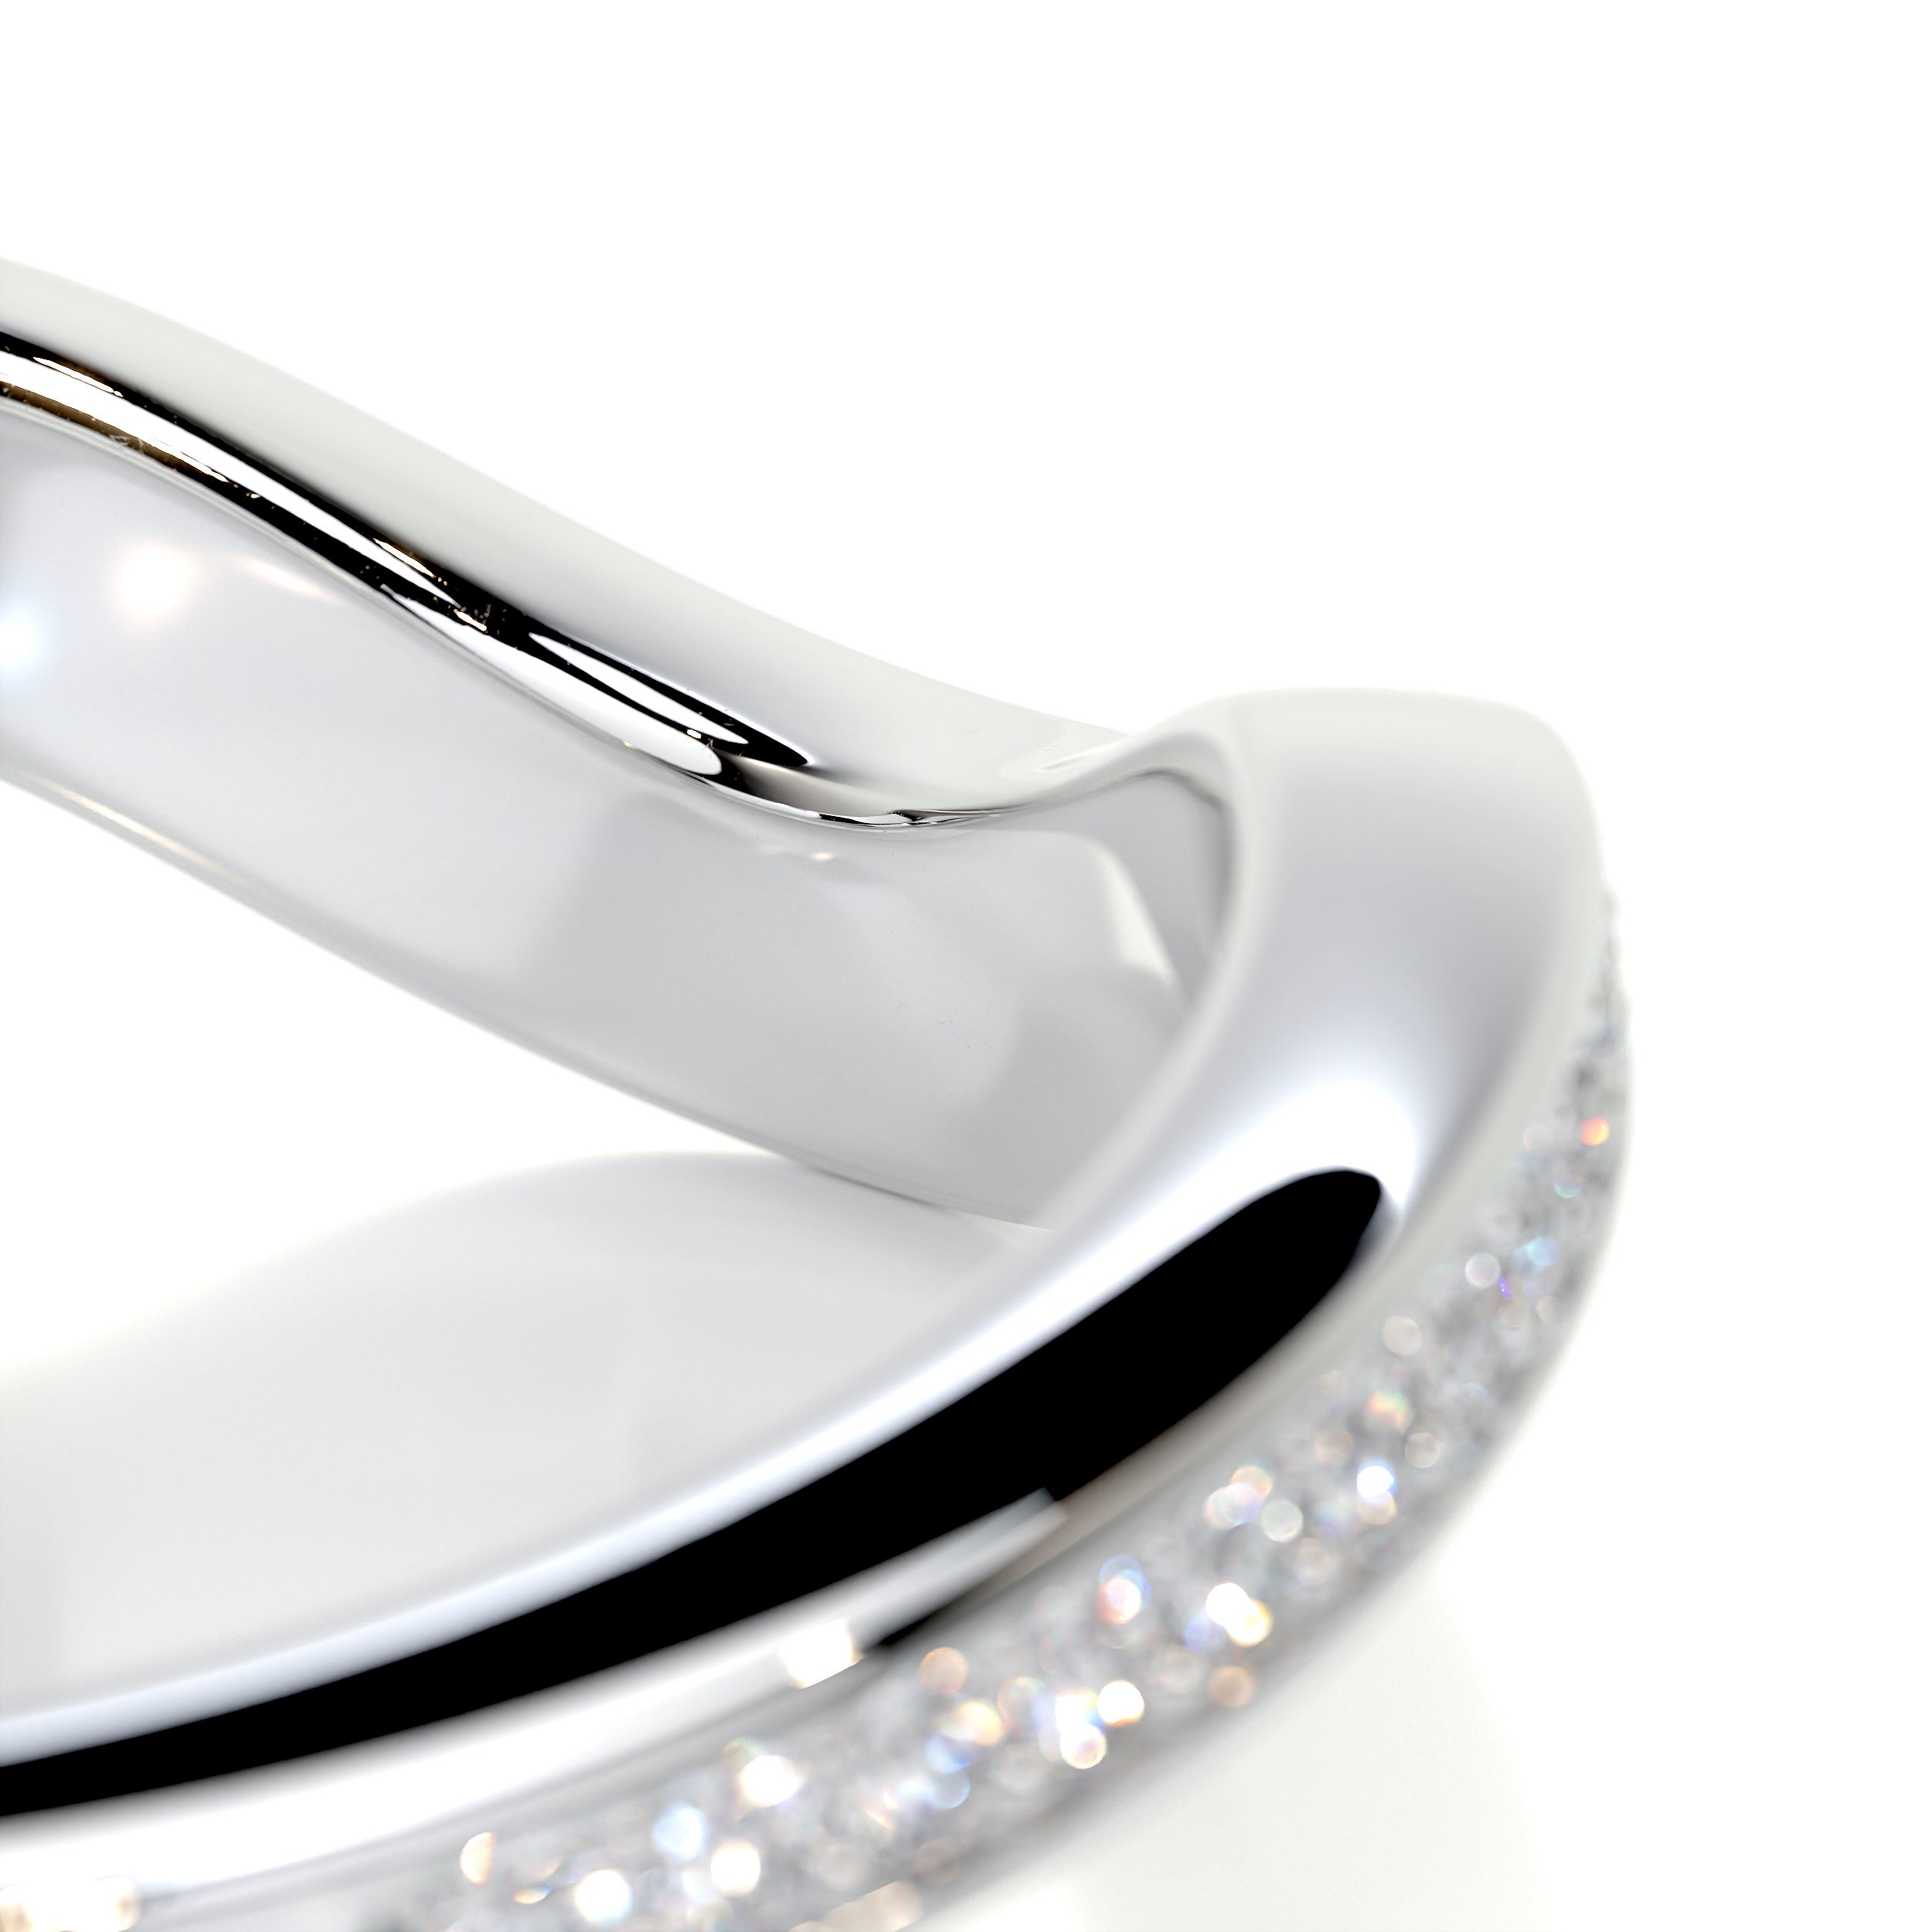 Lucy Diamond Wedding Ring   (0.30 Carat) -18K White Gold